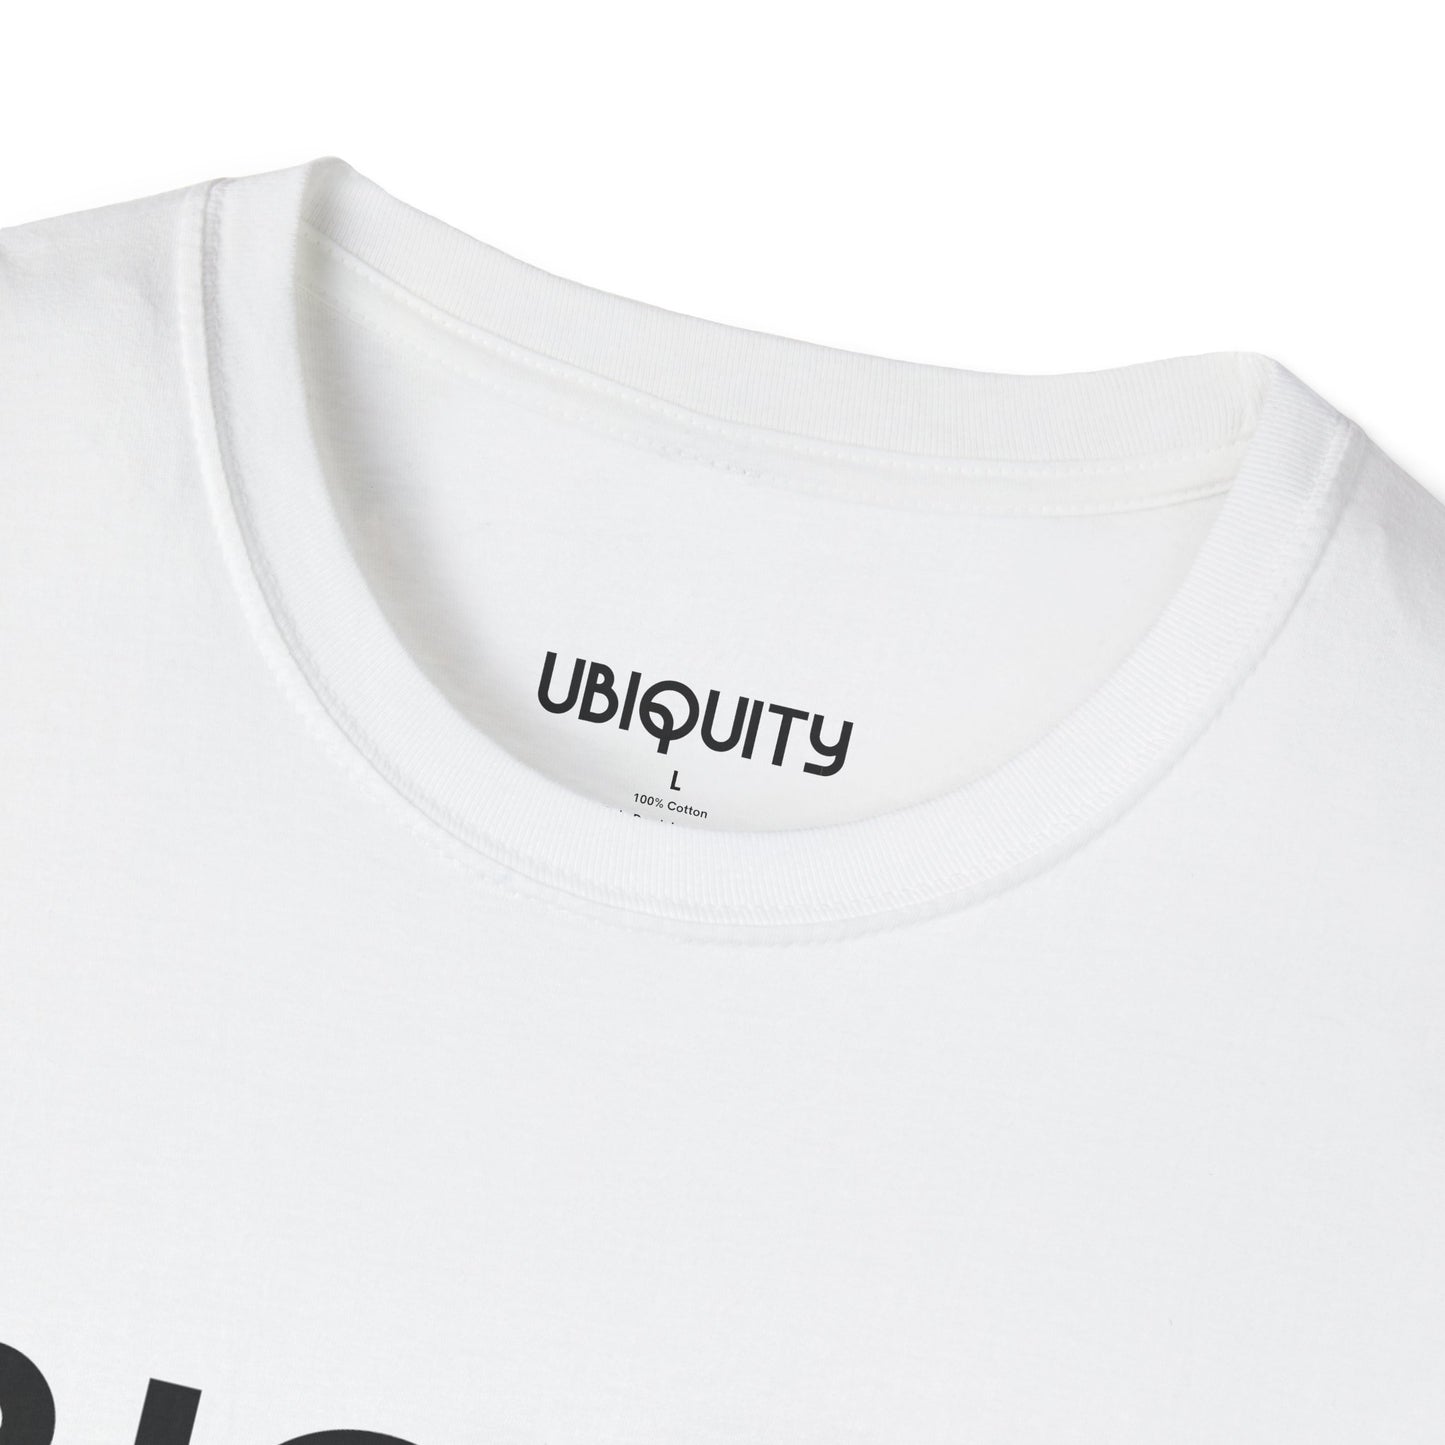 Ubiquity Brand Logo Tee